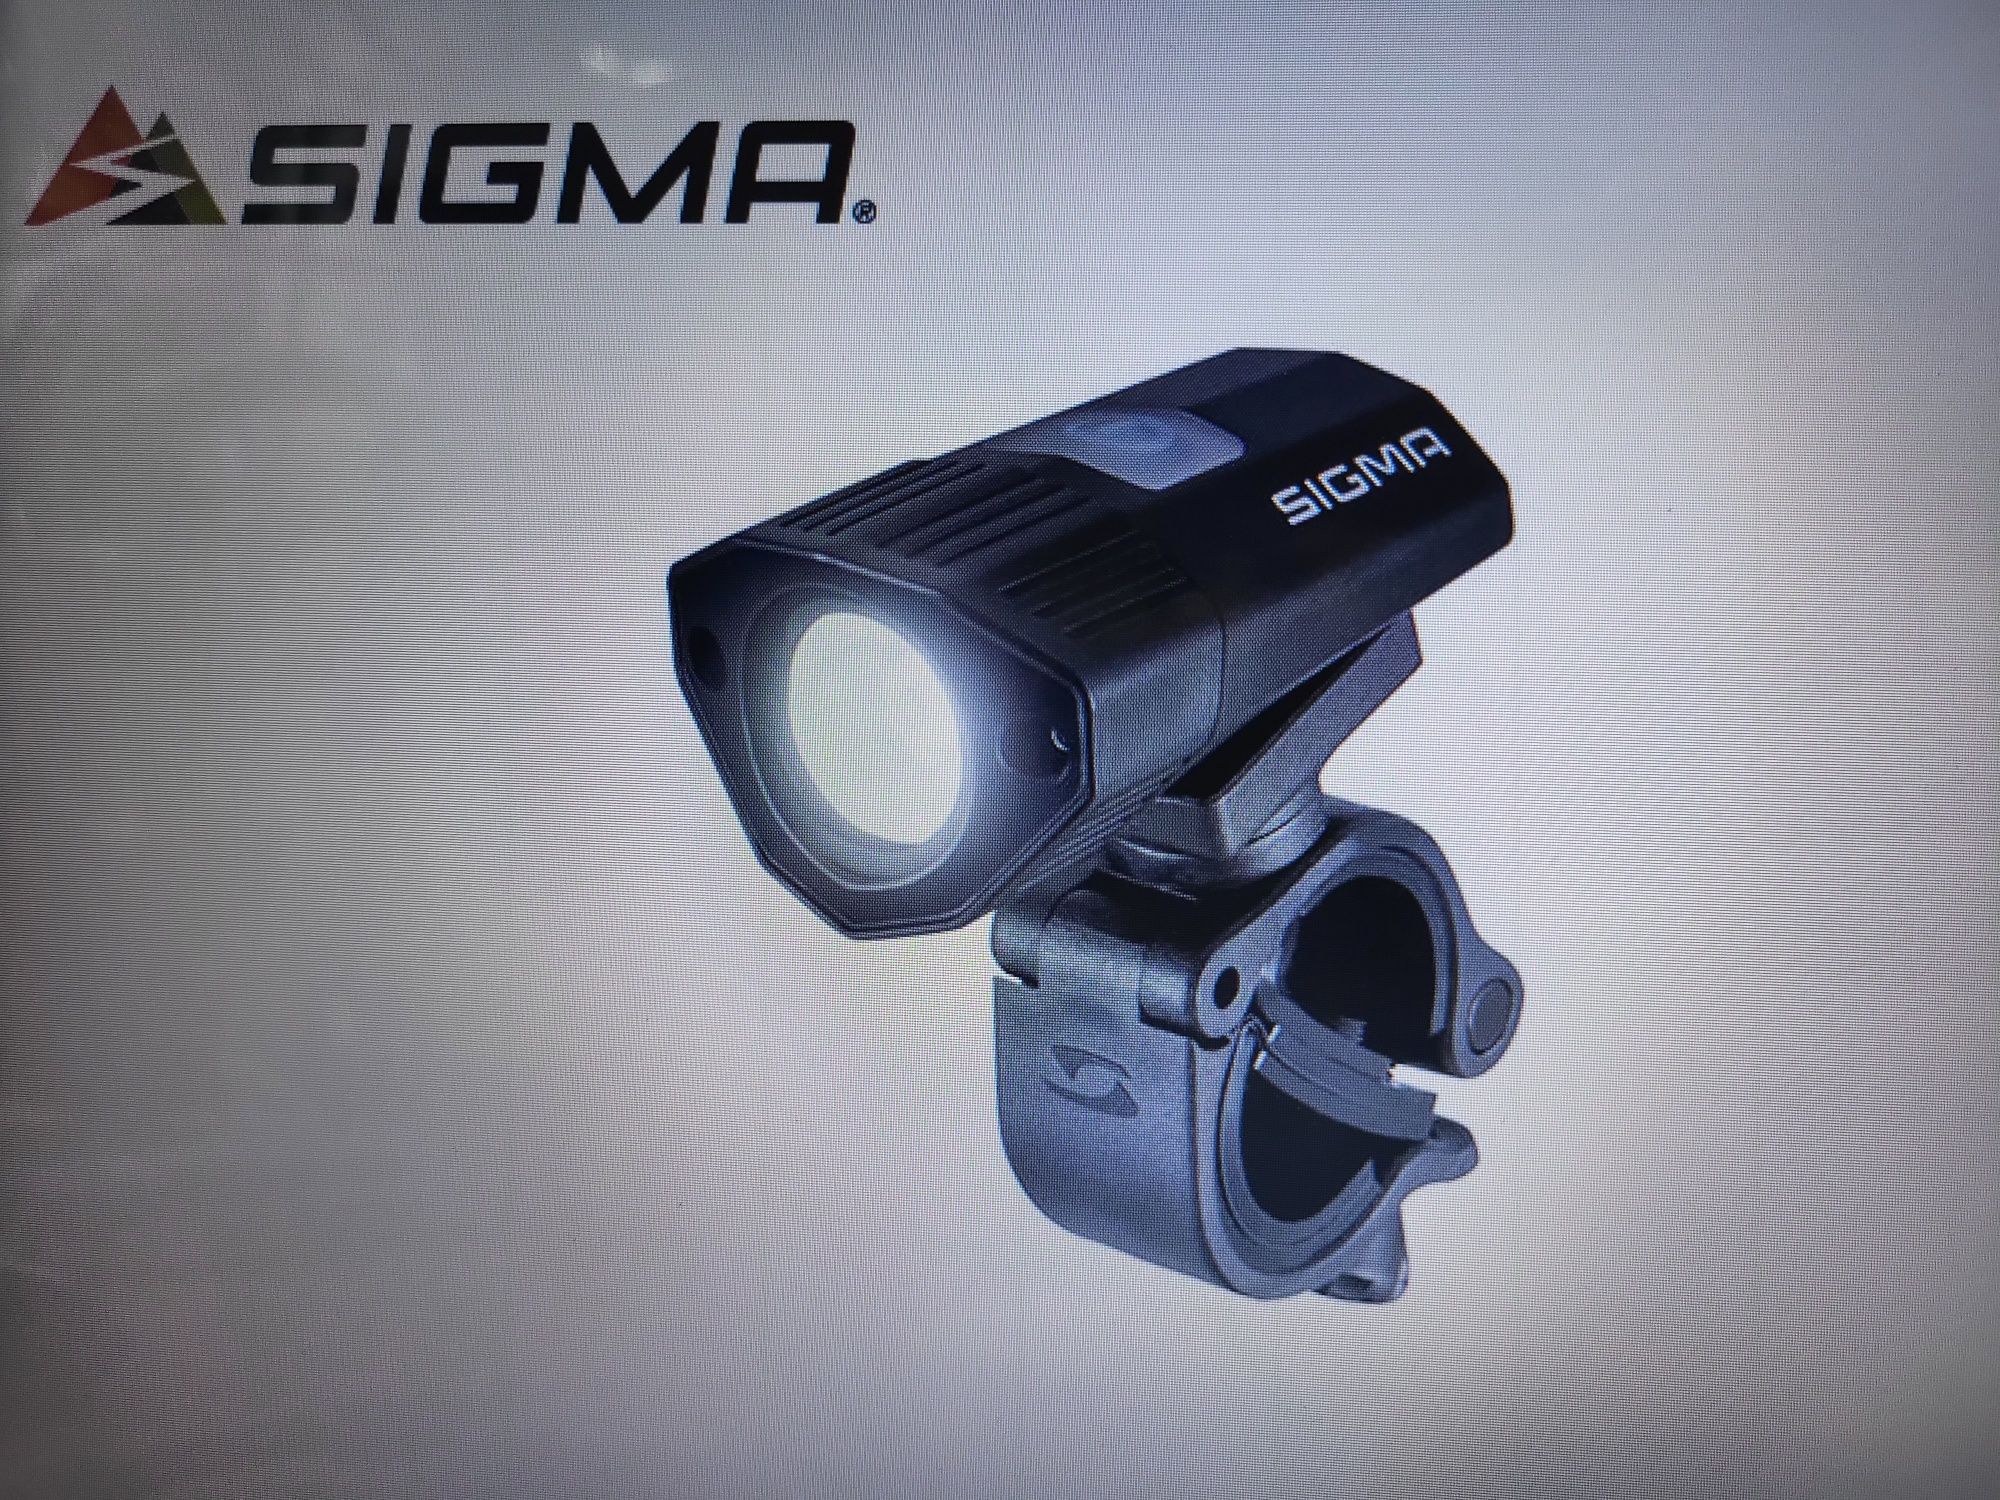 Vând far, lanterna Sigma cu USB